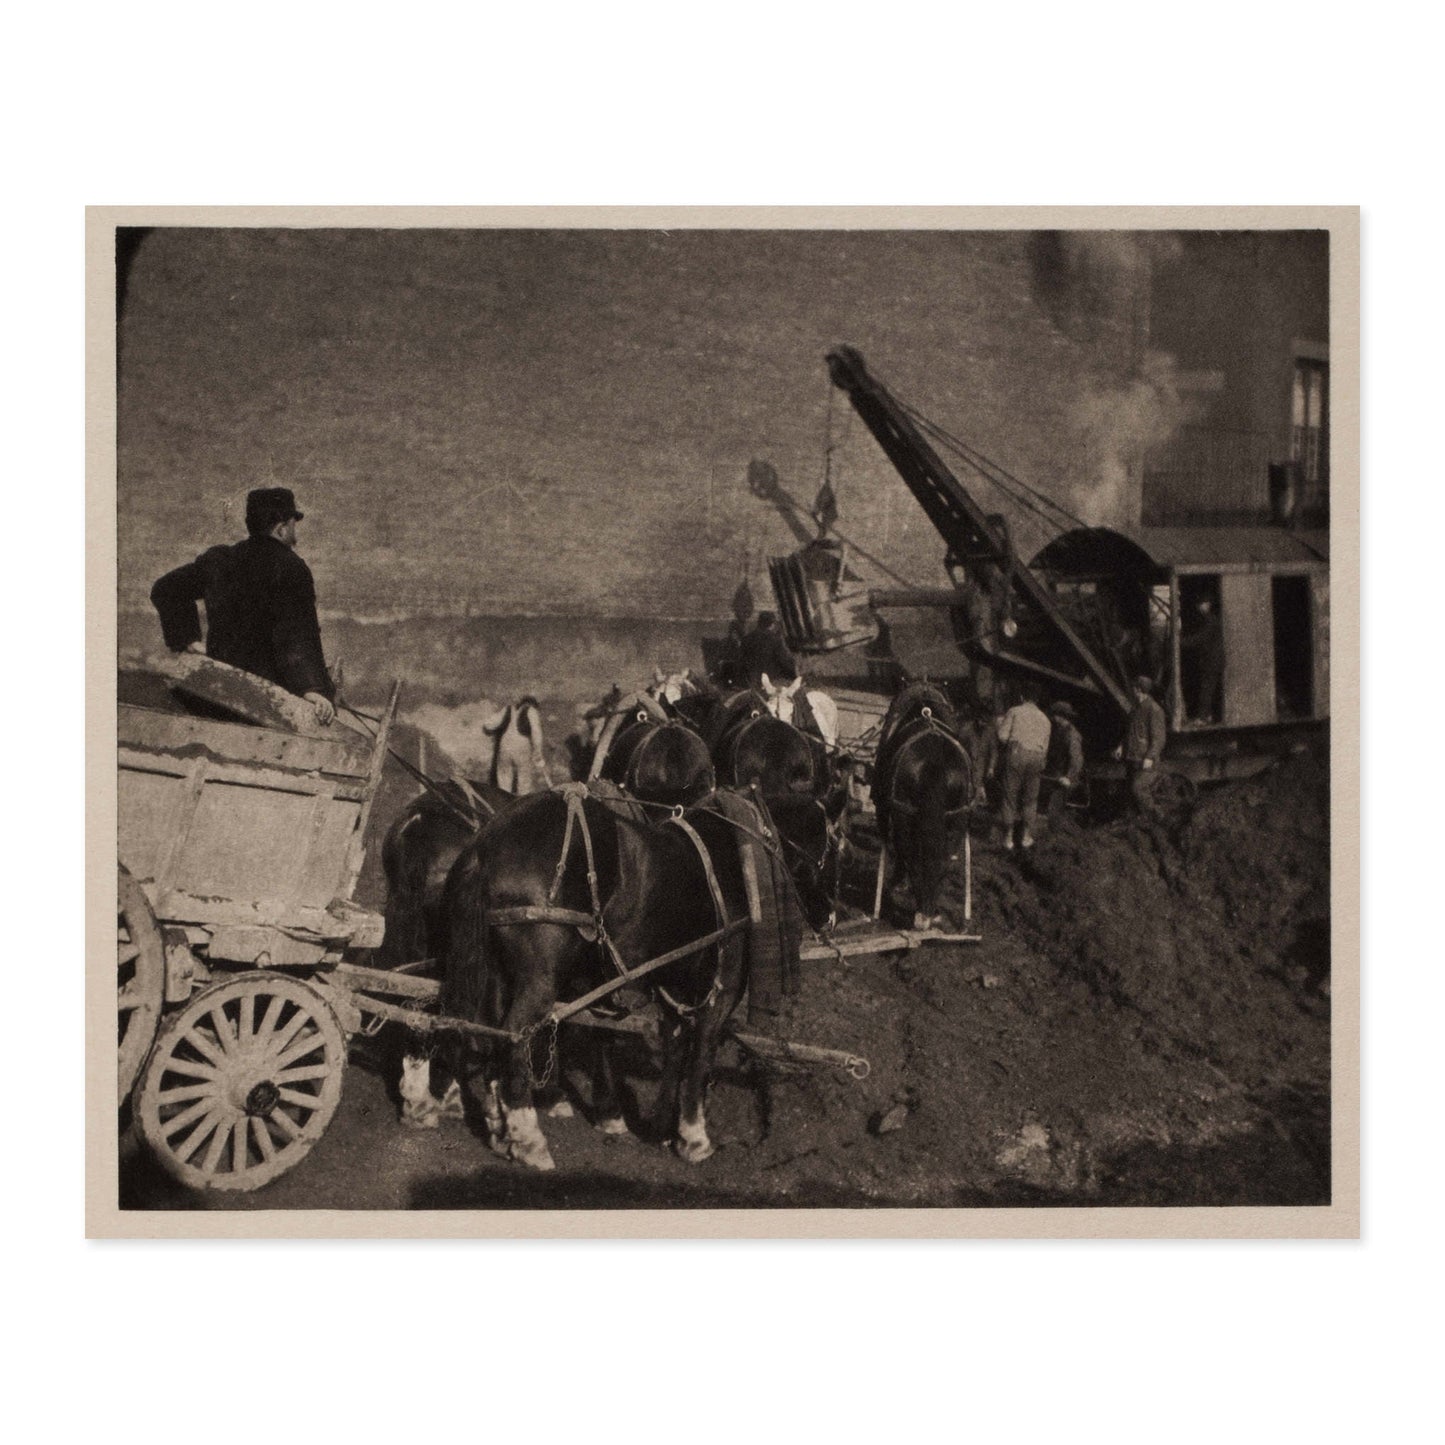 Alfred Stieglitz, Excavating-New York 1911